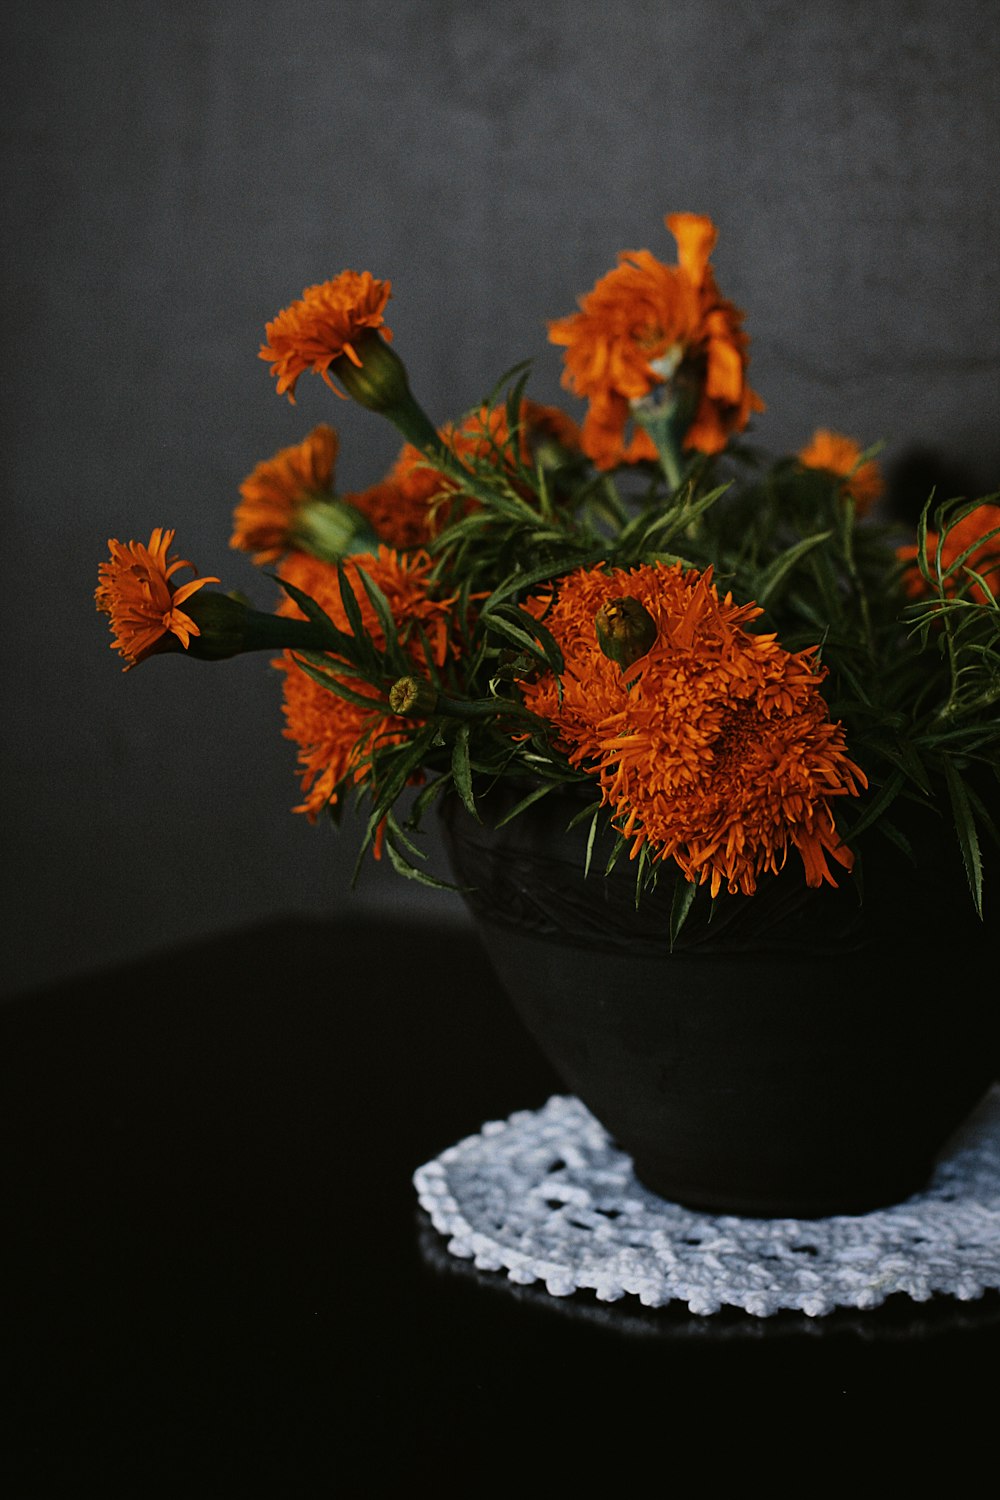 orange and yellow flowers in black ceramic vase